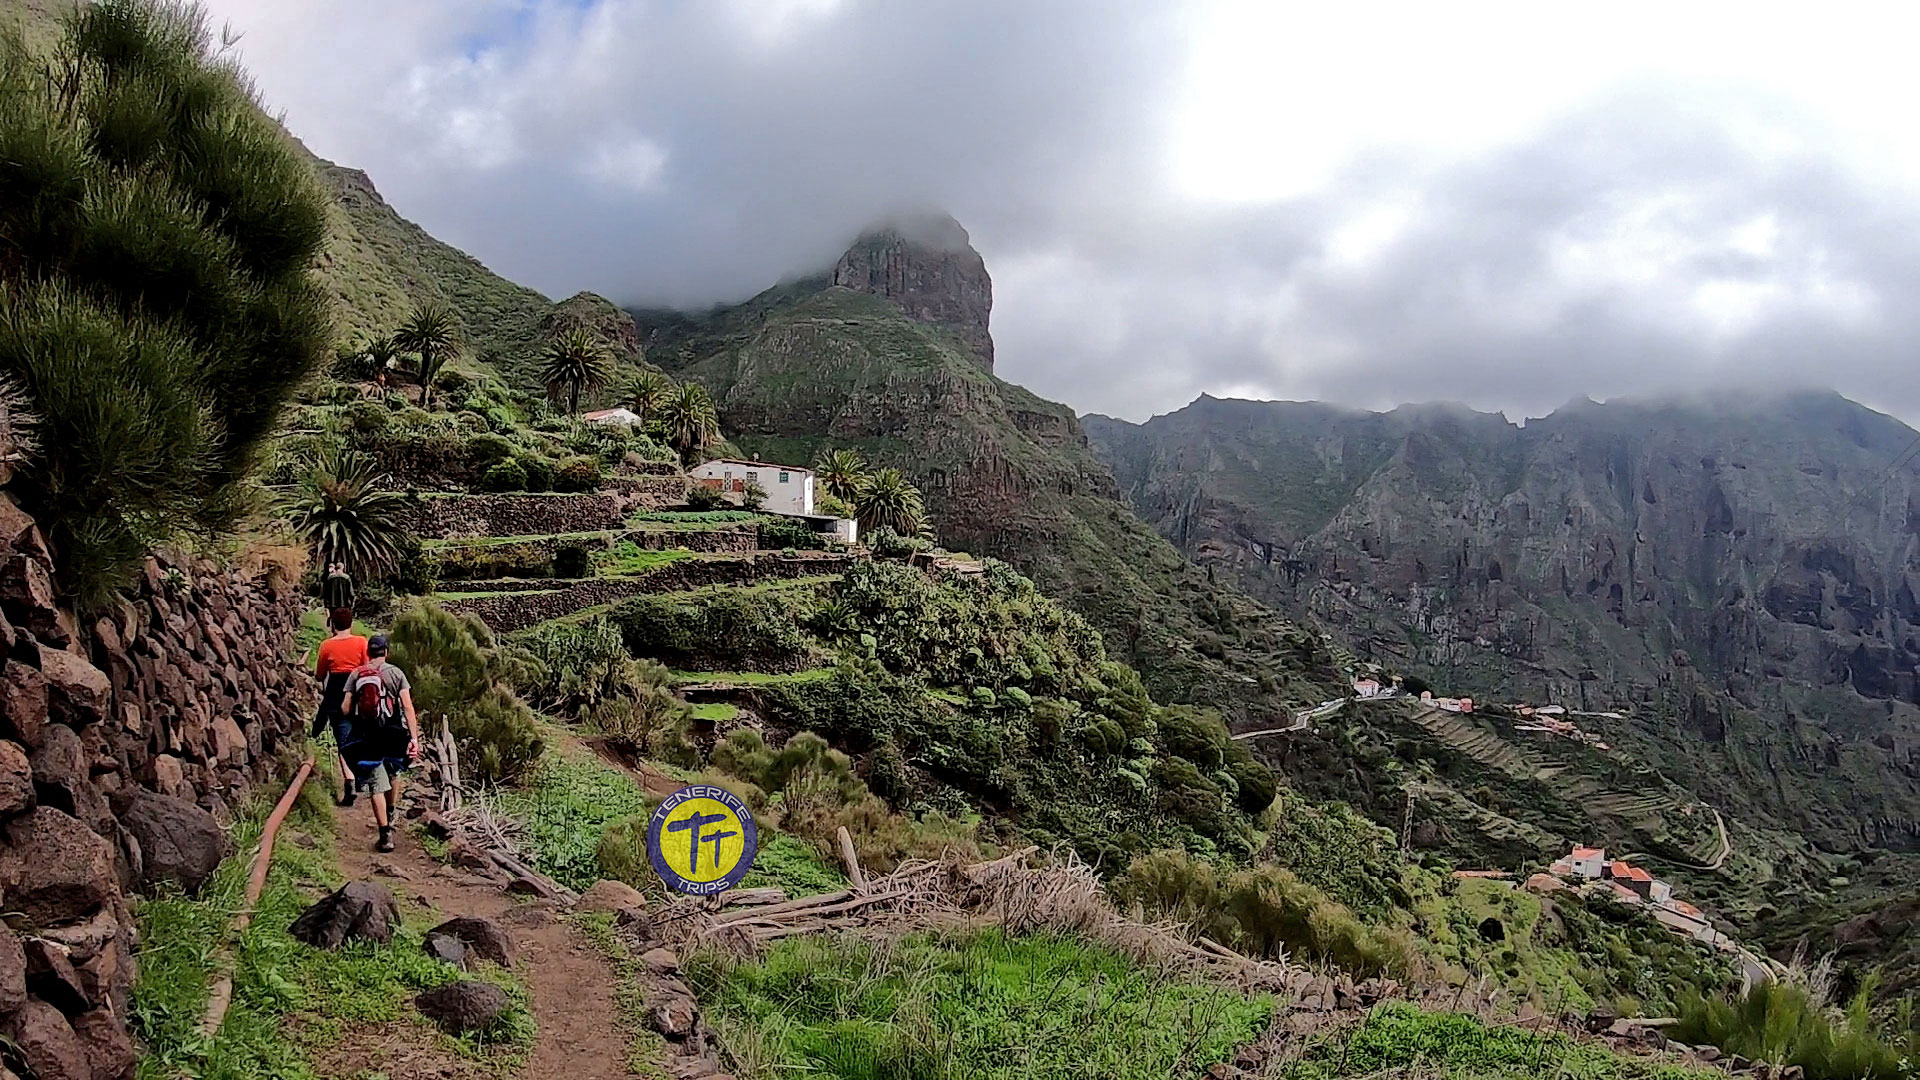 Tenerife attractions